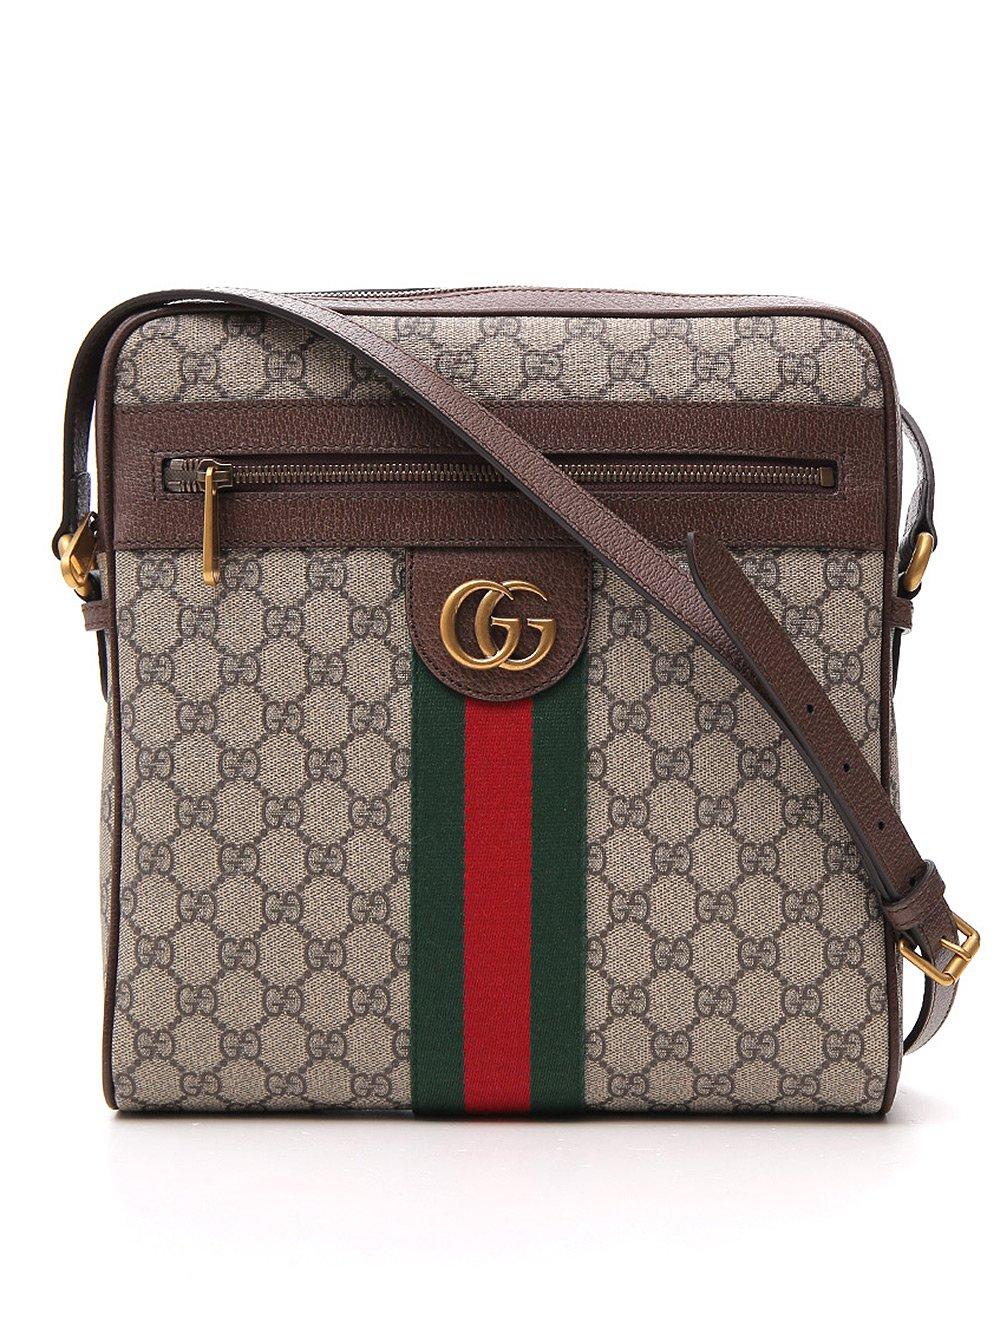 Gucci GG Supreme Ophidia Medium Messenger Bag for Men